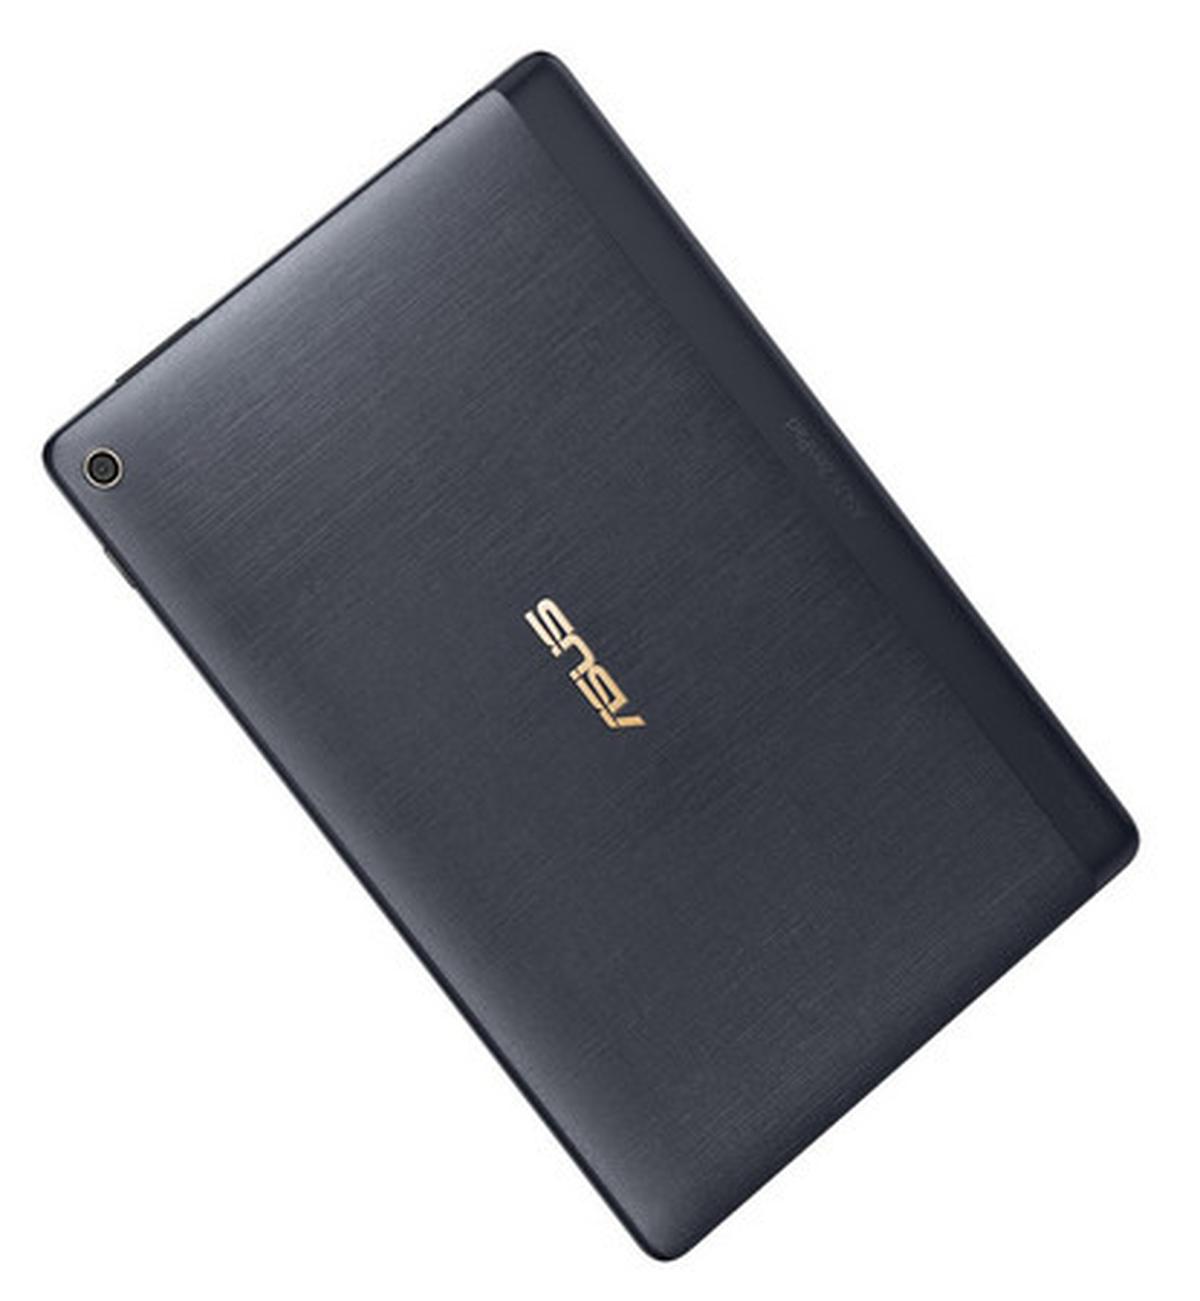 Asus ZenPad 10